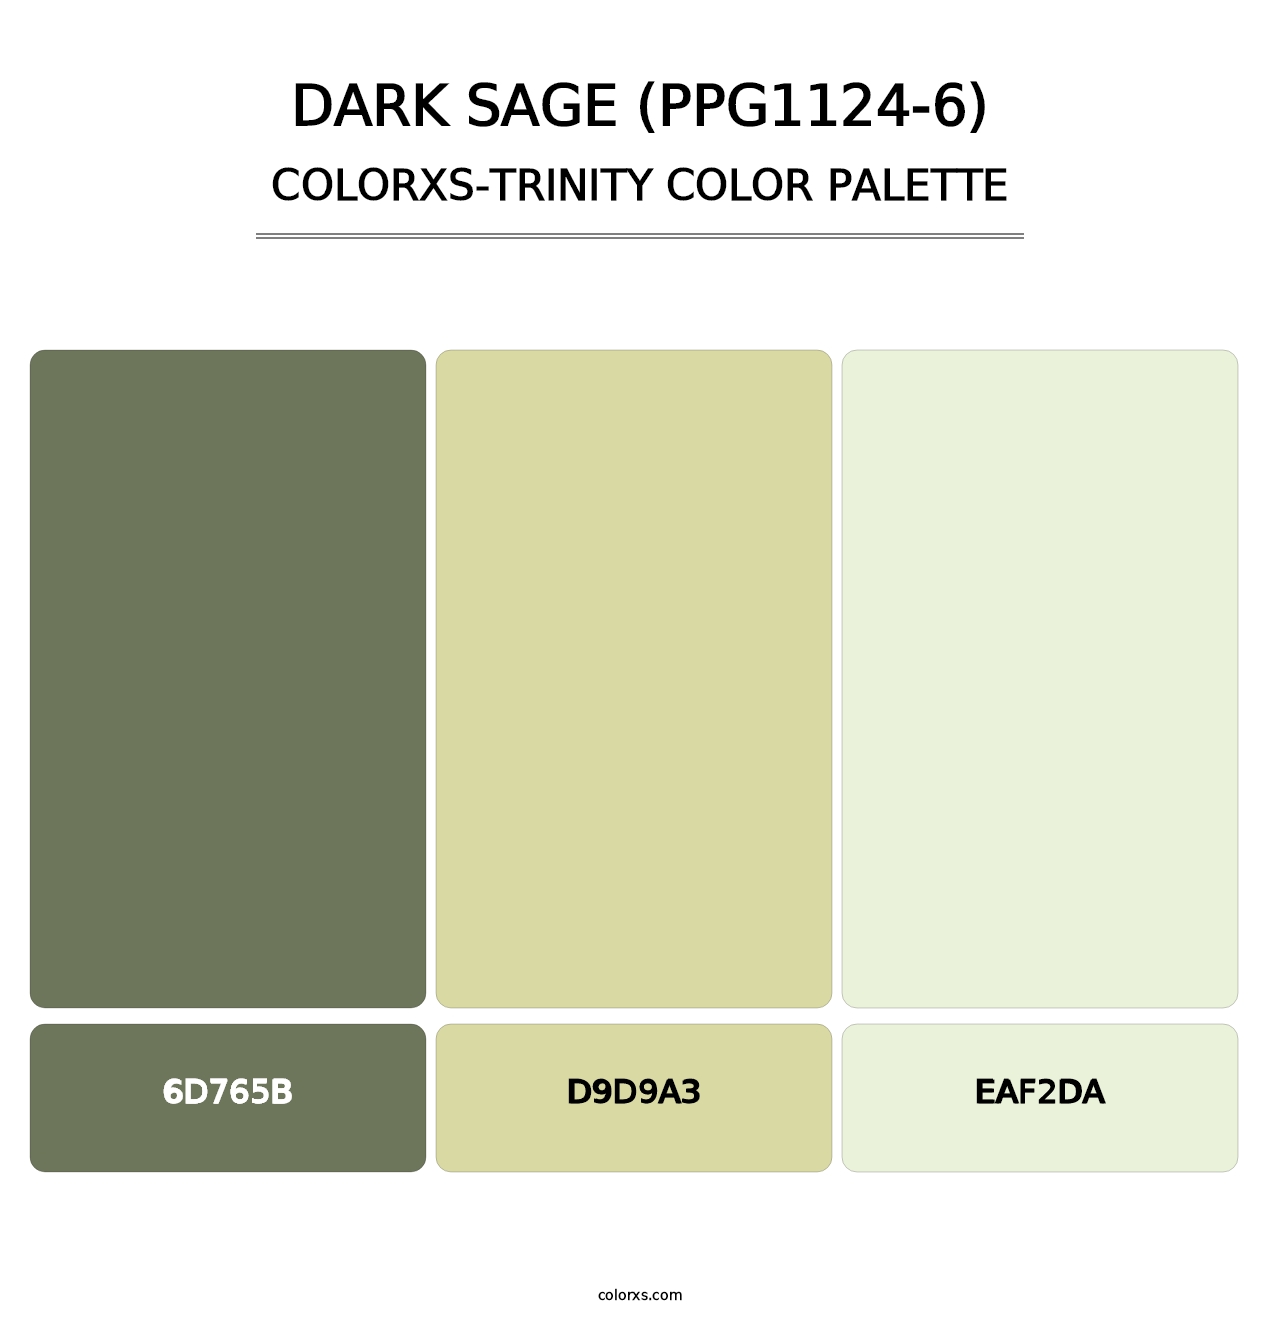 Dark Sage (PPG1124-6) - Colorxs Trinity Palette